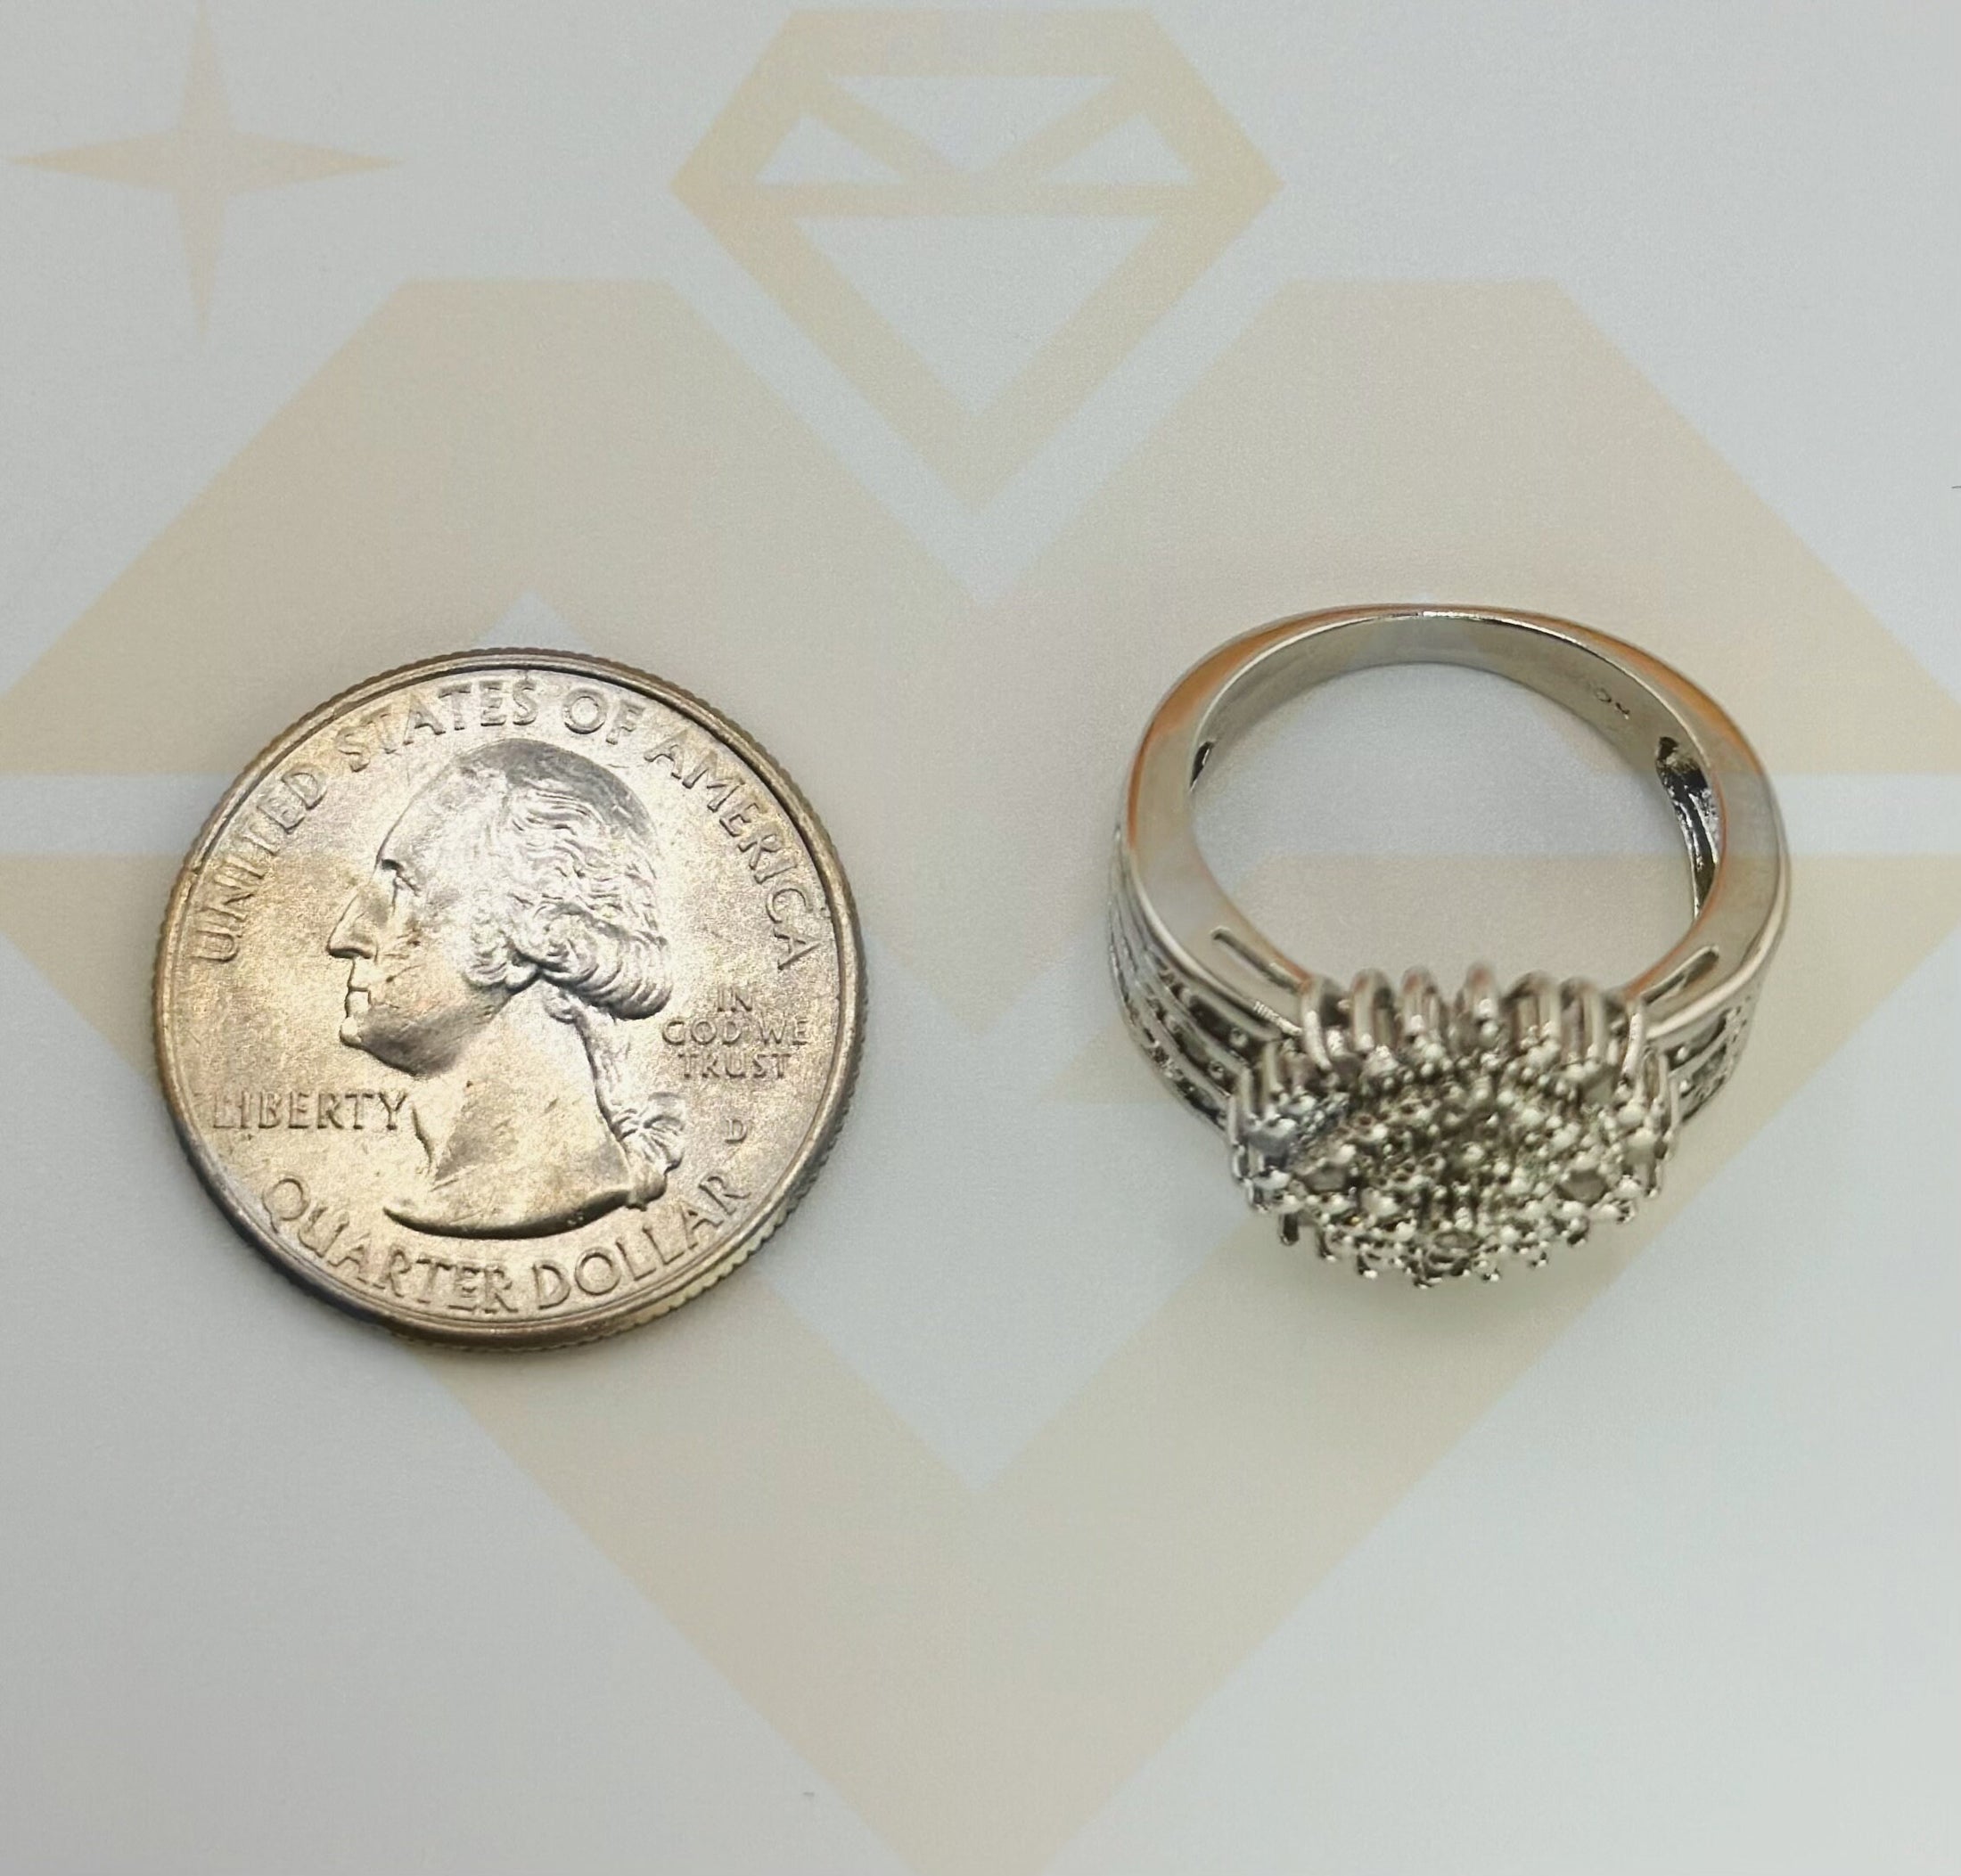 Real Diamond Elegant gift ring for her 14k white gold vermeil genuine diamond ring, Engagement Promise Wedding Bridal Jewelry ring Christmas